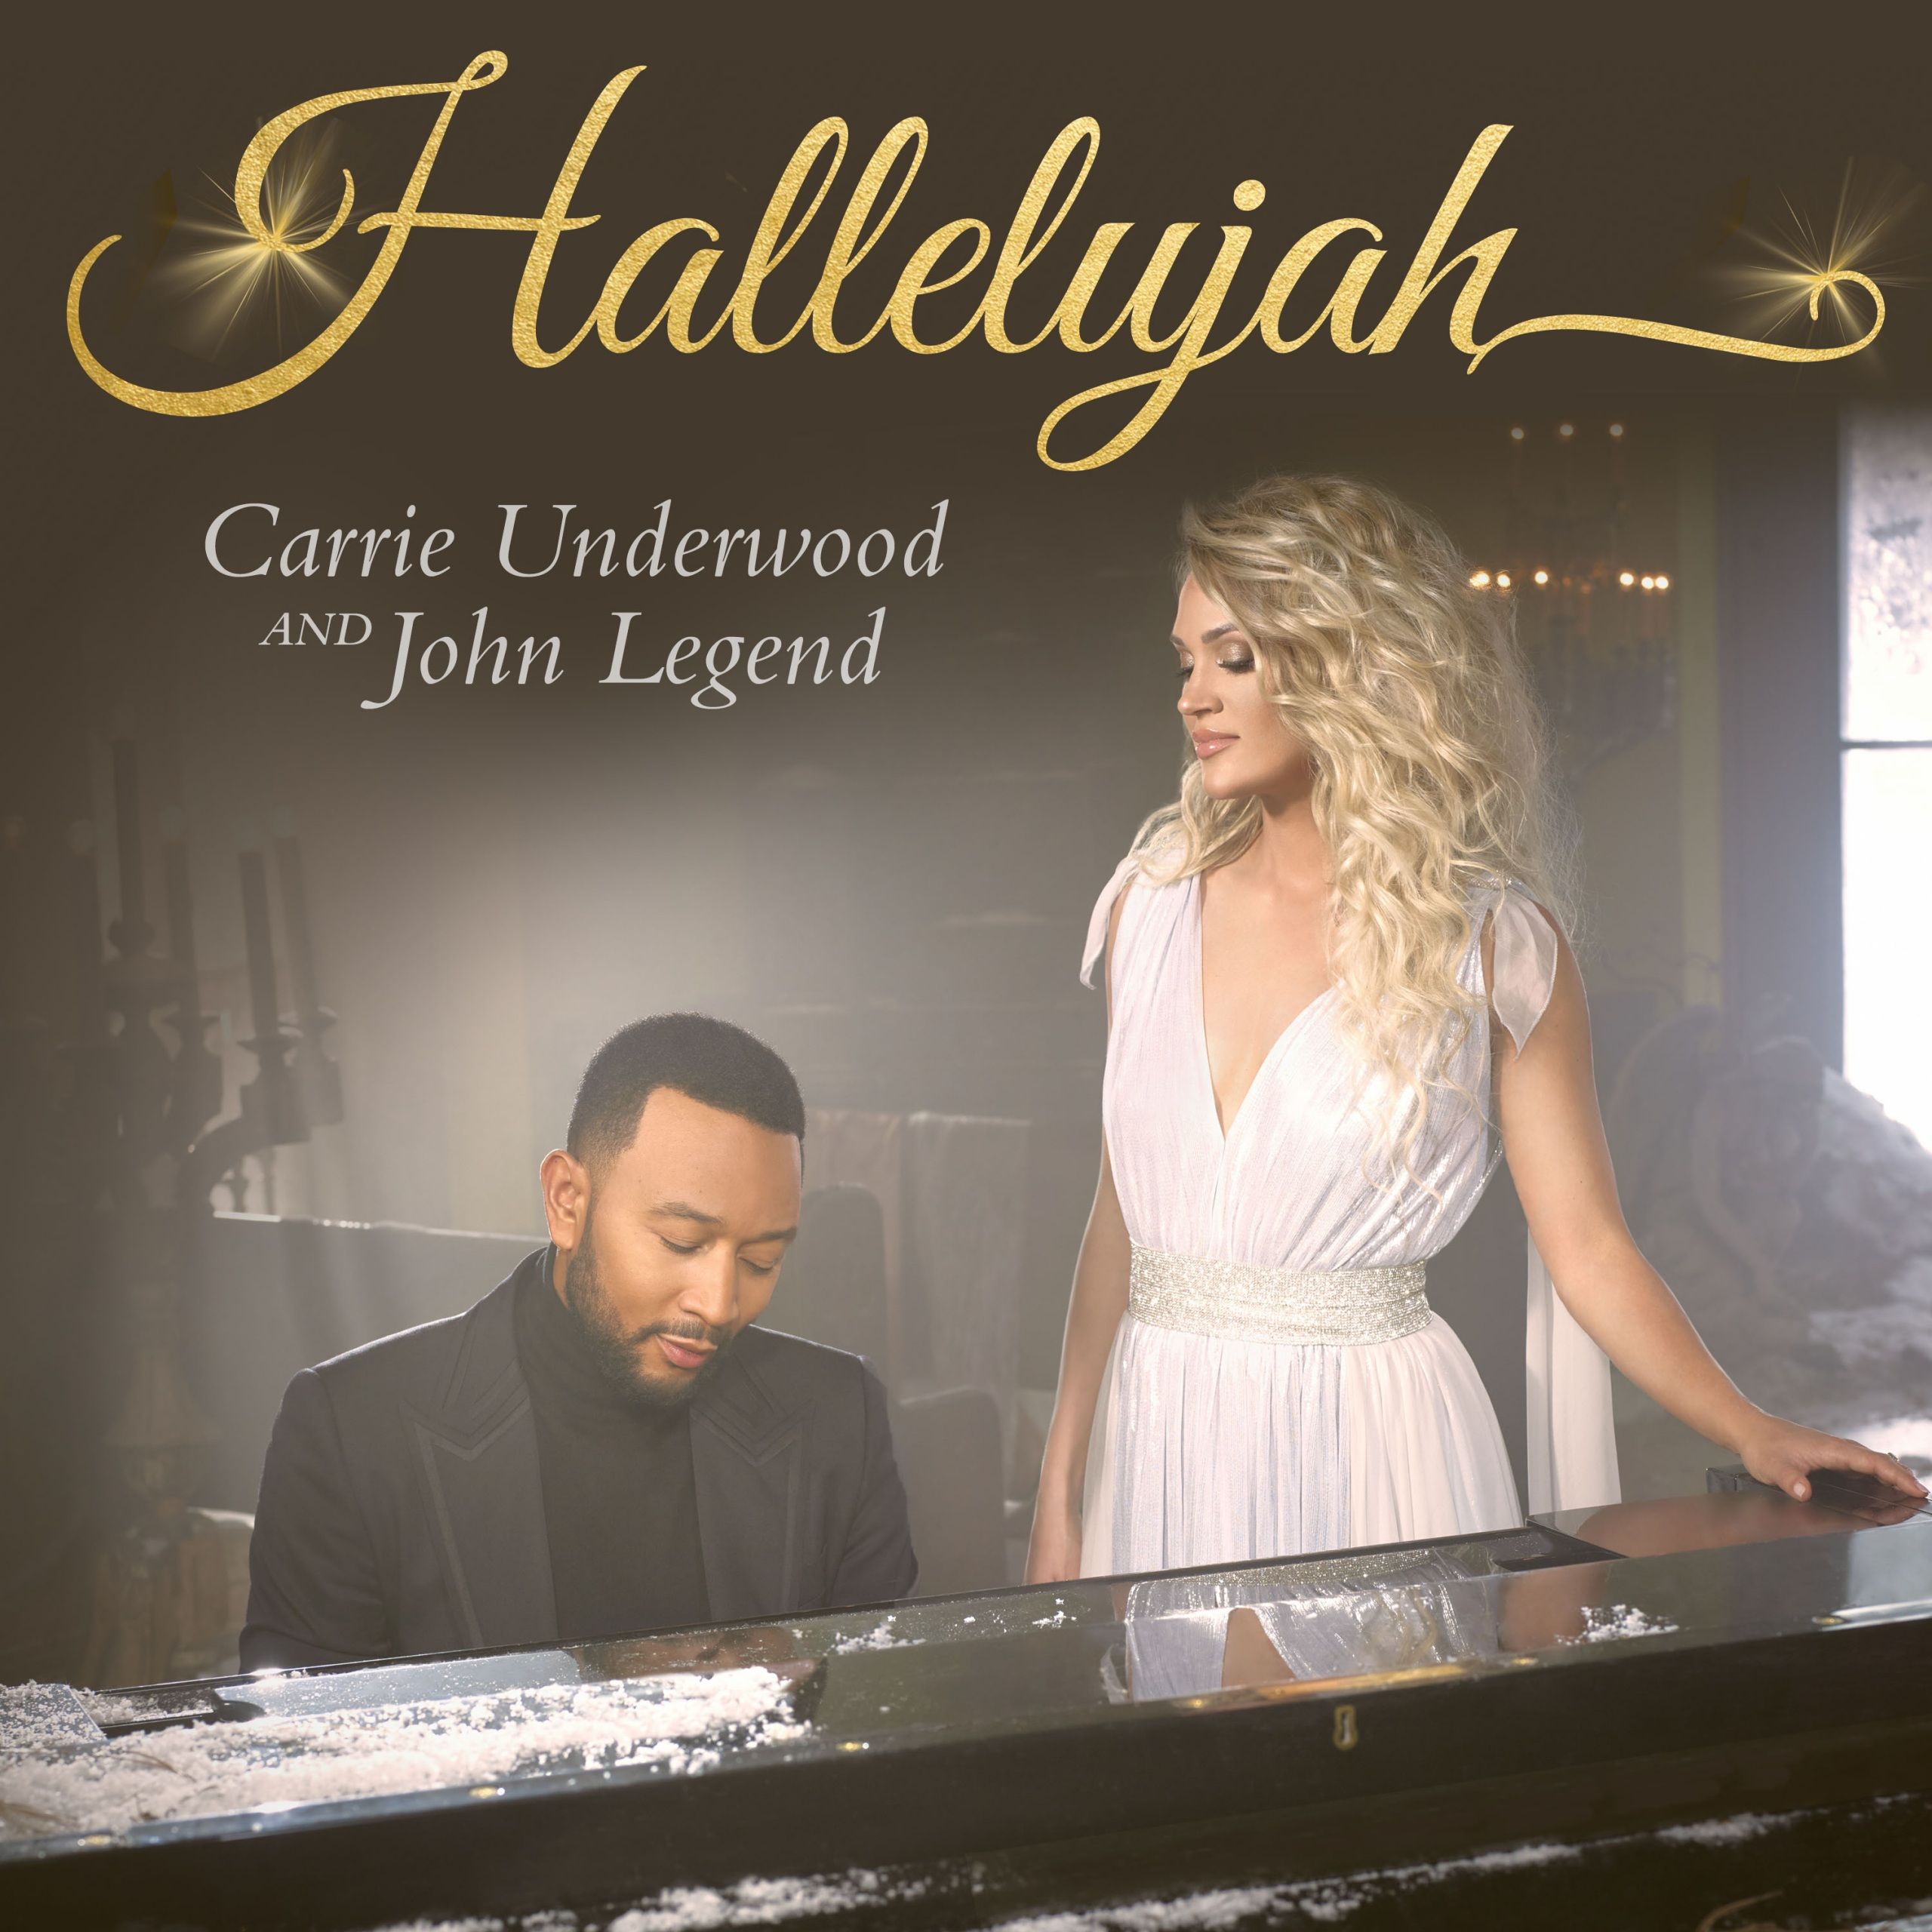 CARRIE UNDERWOOD AND JOHN LEGEND DEBUT MUSIC VIDEO FOR “HALLELUJAH”